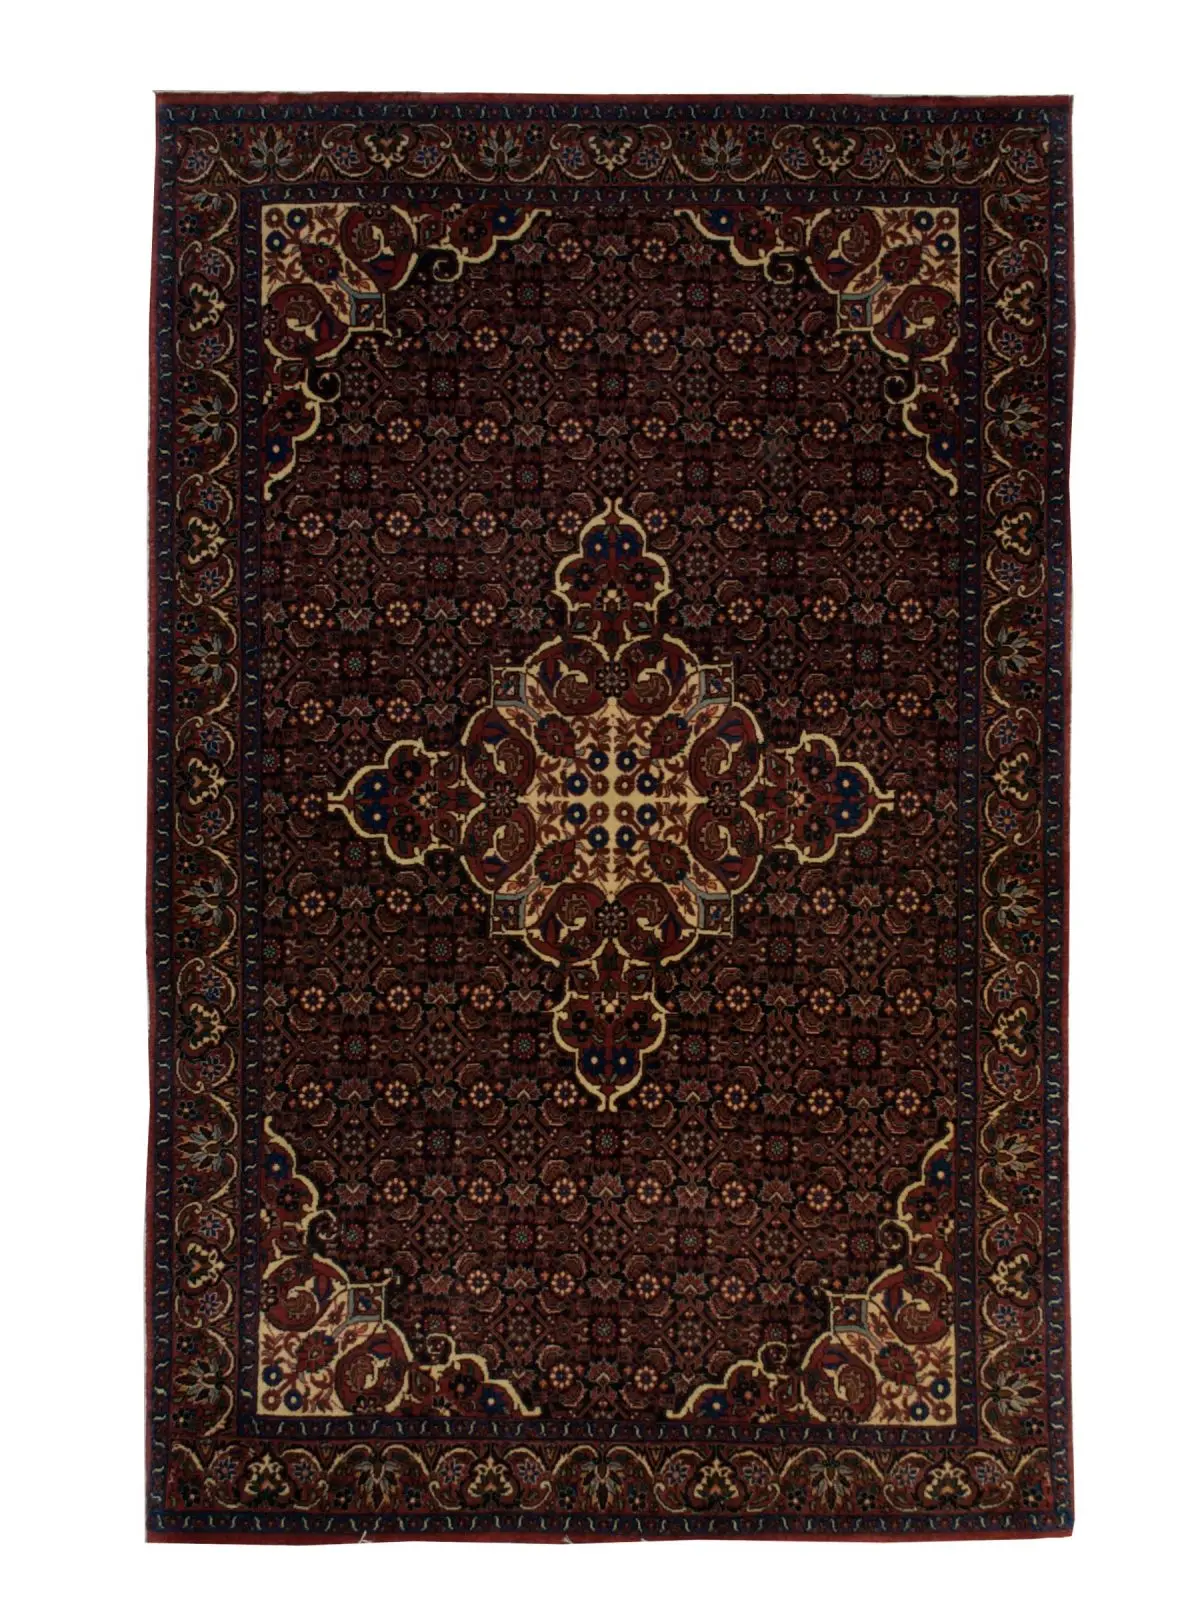 Persian Bijar rug 3' 6" x 5' 7" Handmade Area Rug - Shabahang Royal Carpet